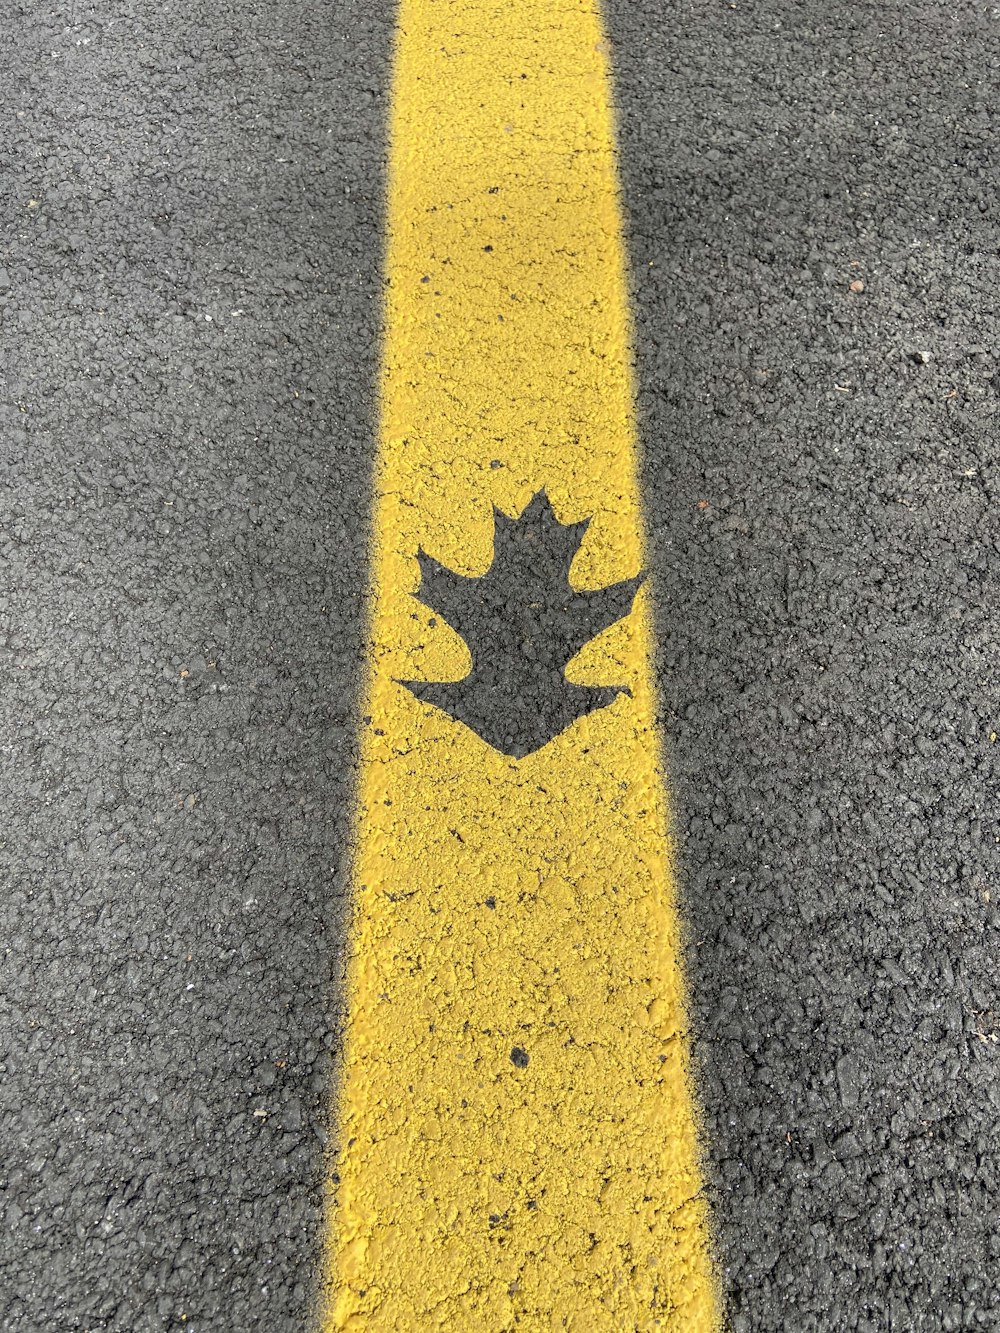 yellow line on gray asphalt road